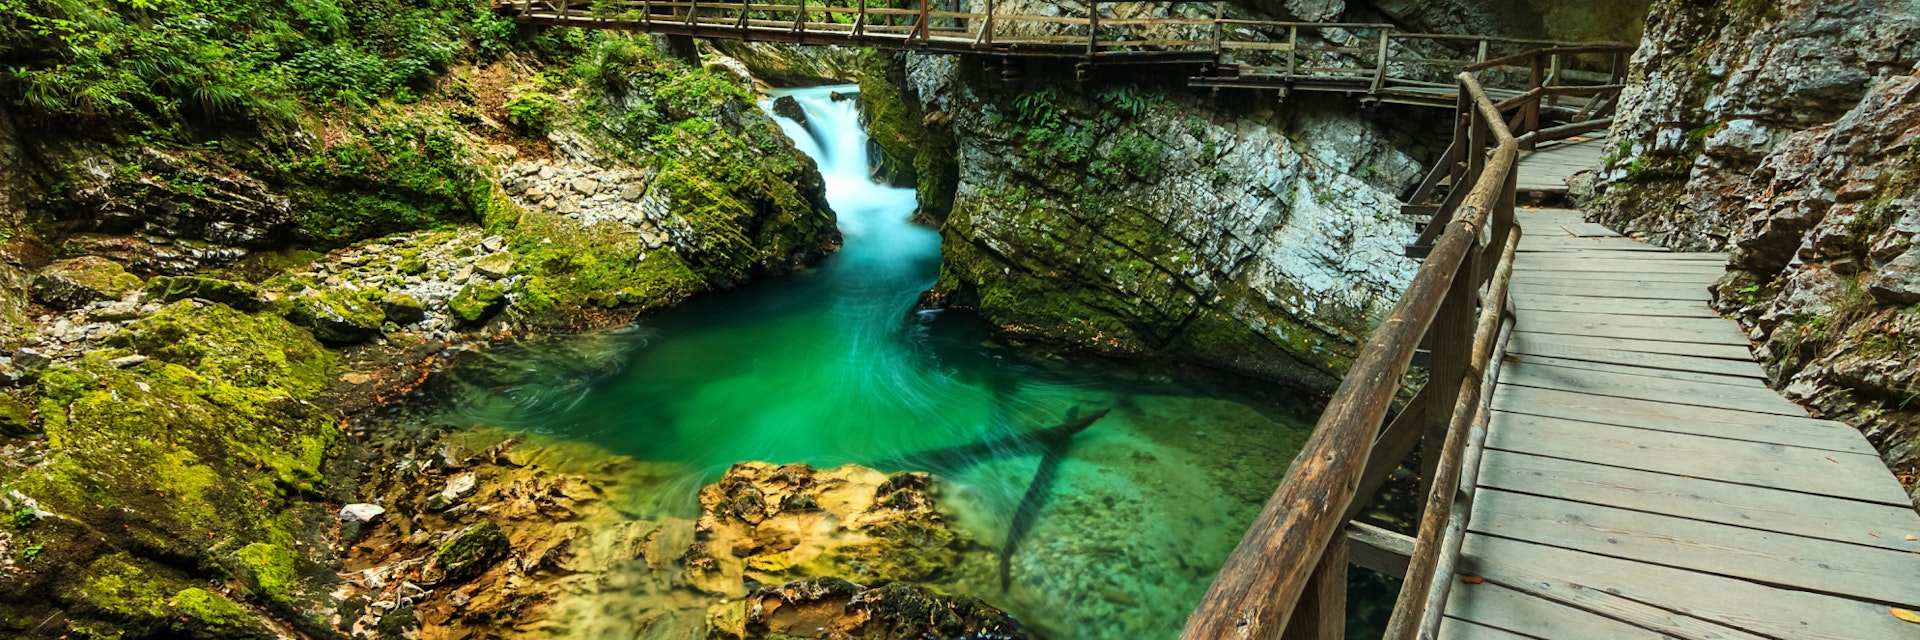 Vintgar gorge and wooden path,Bled,Slovenia